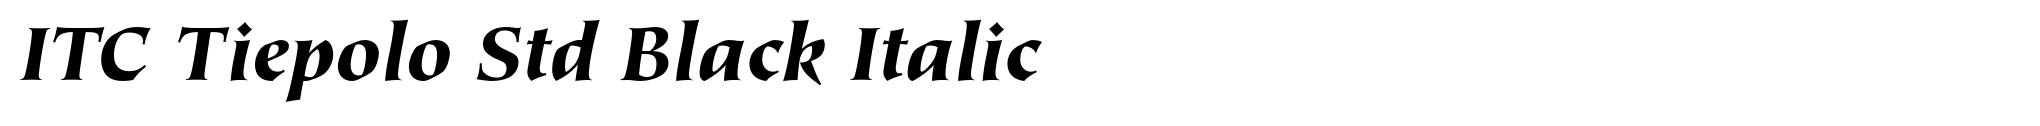 ITC Tiepolo Std Black Italic image